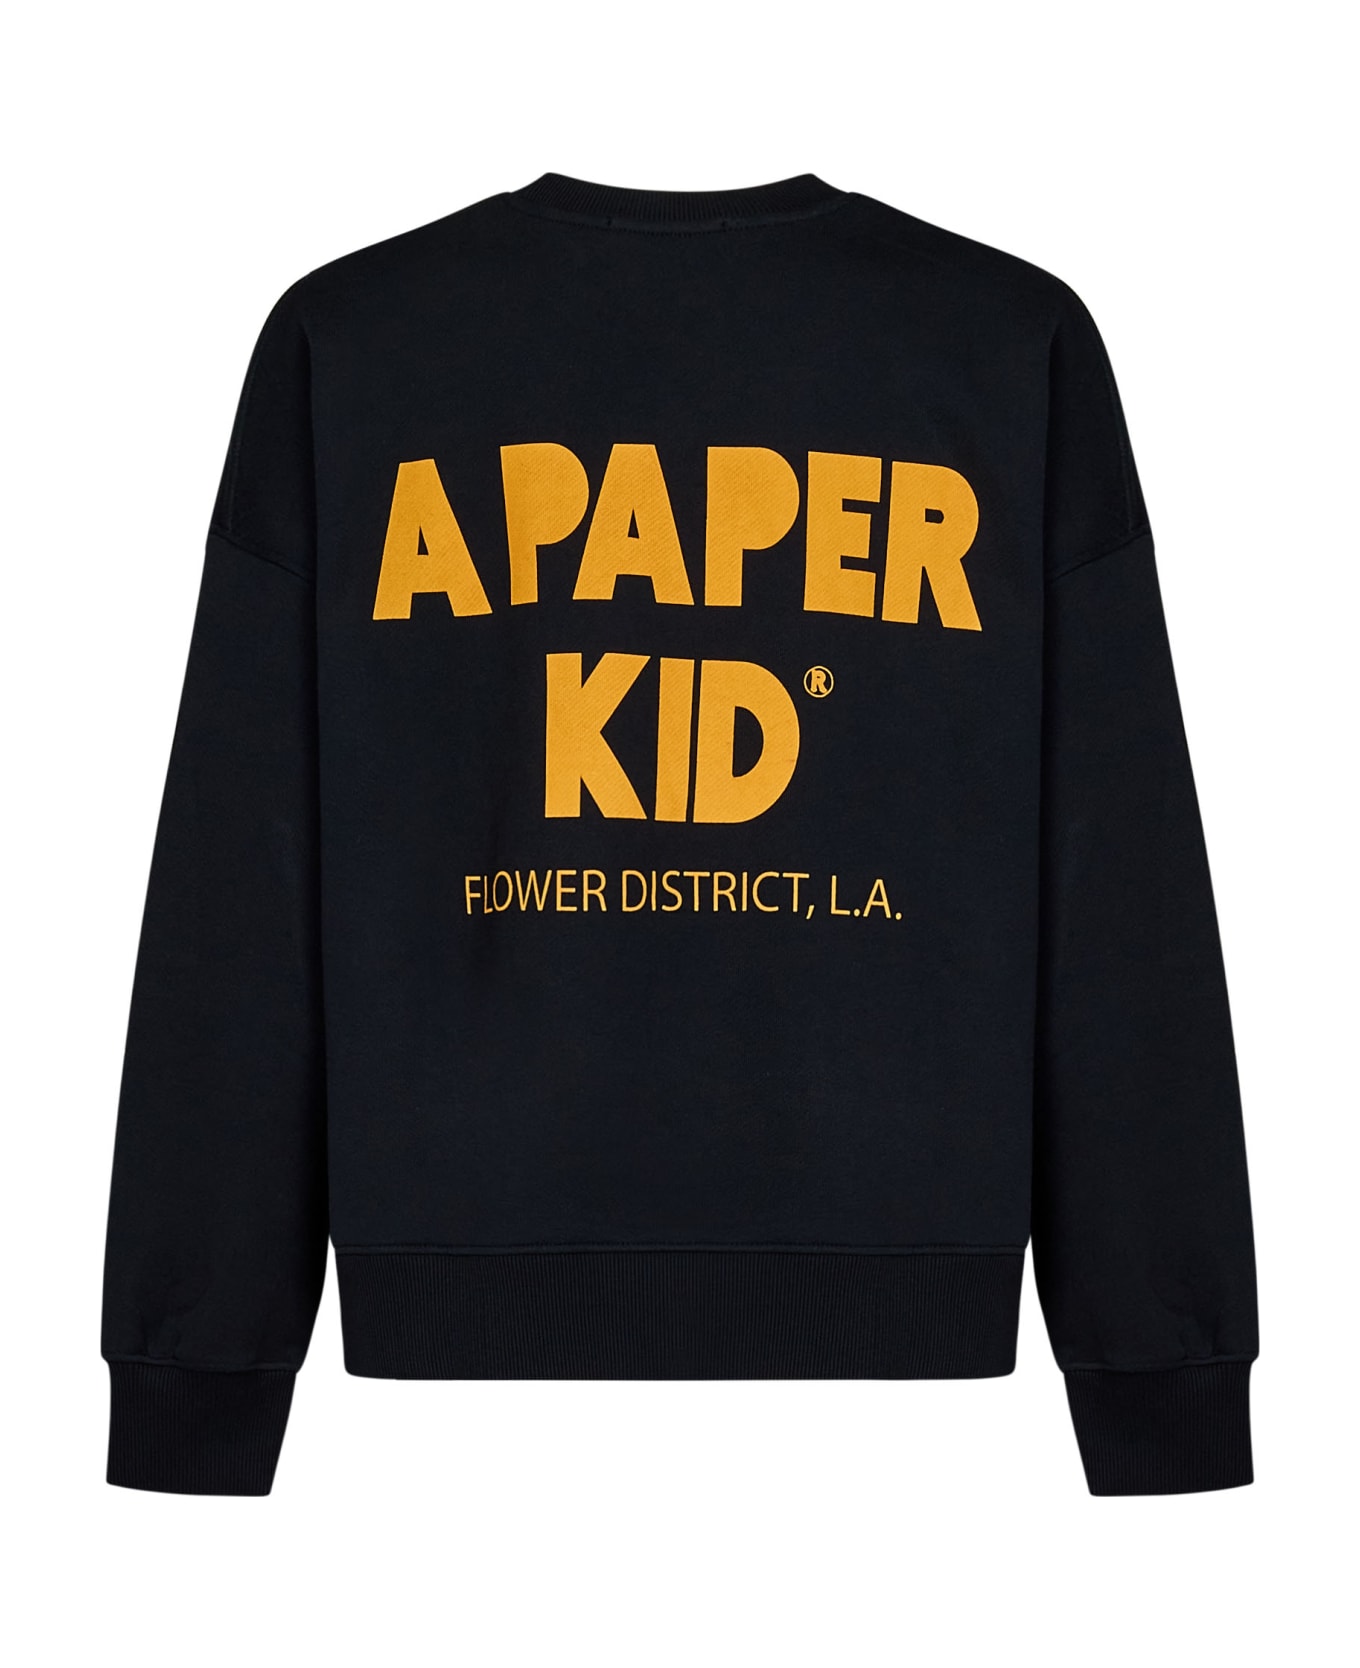 A Paper Kid Sweatshirt - Nero